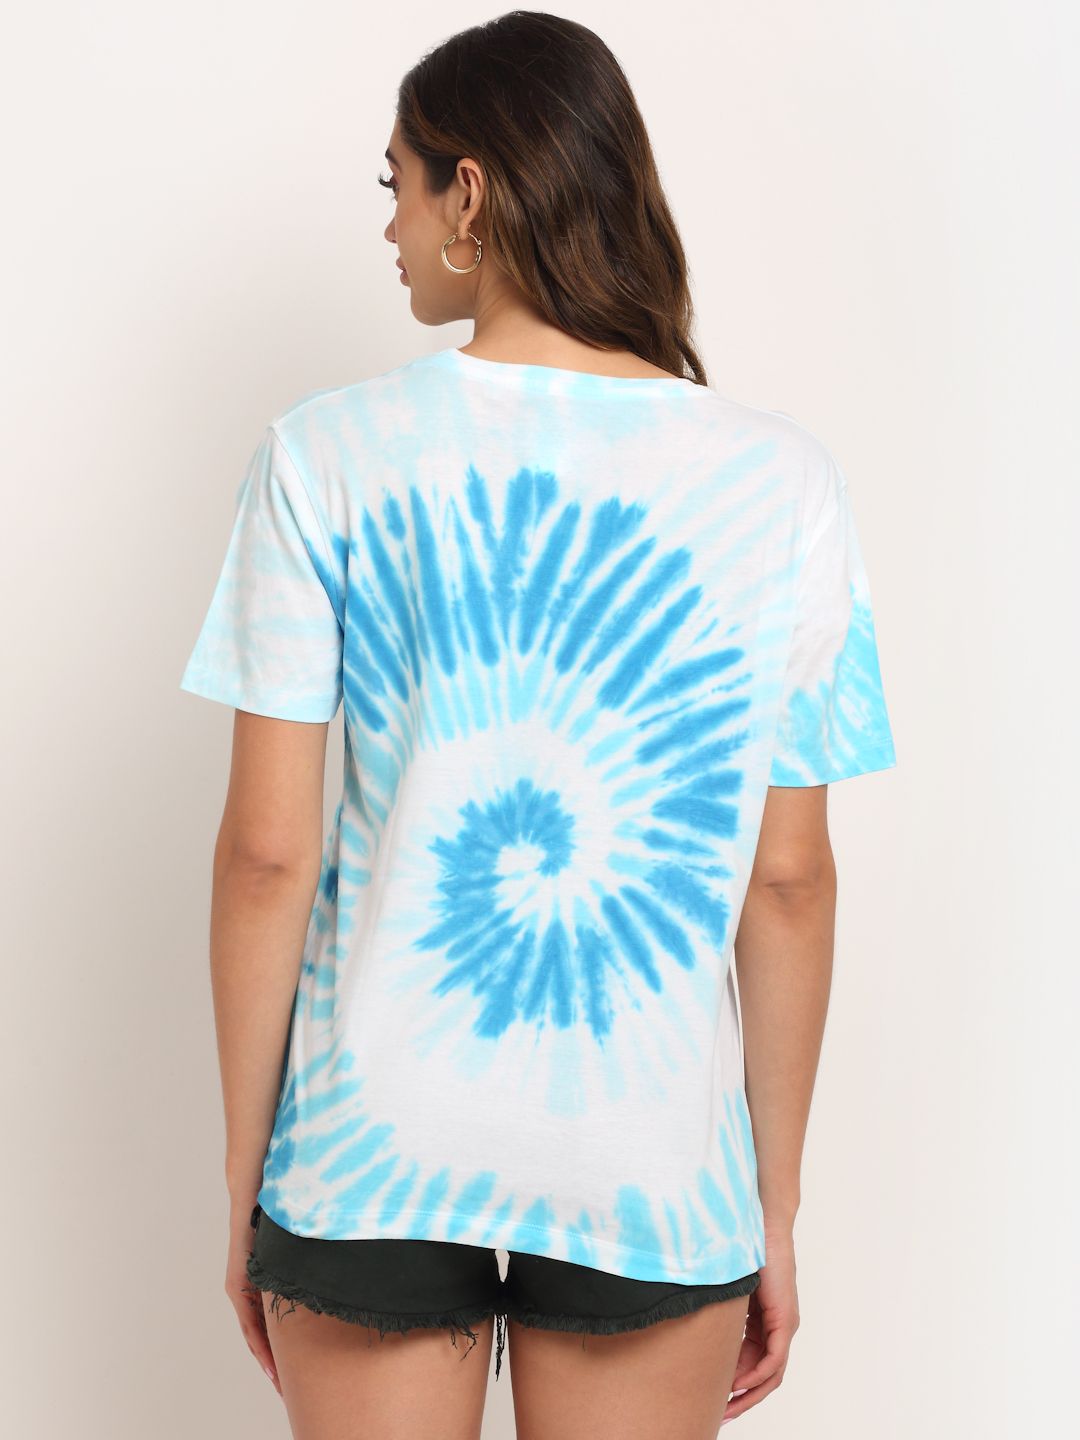 Spiral Pattern, Women Combed Cotton Tie dye blue T-Shirt